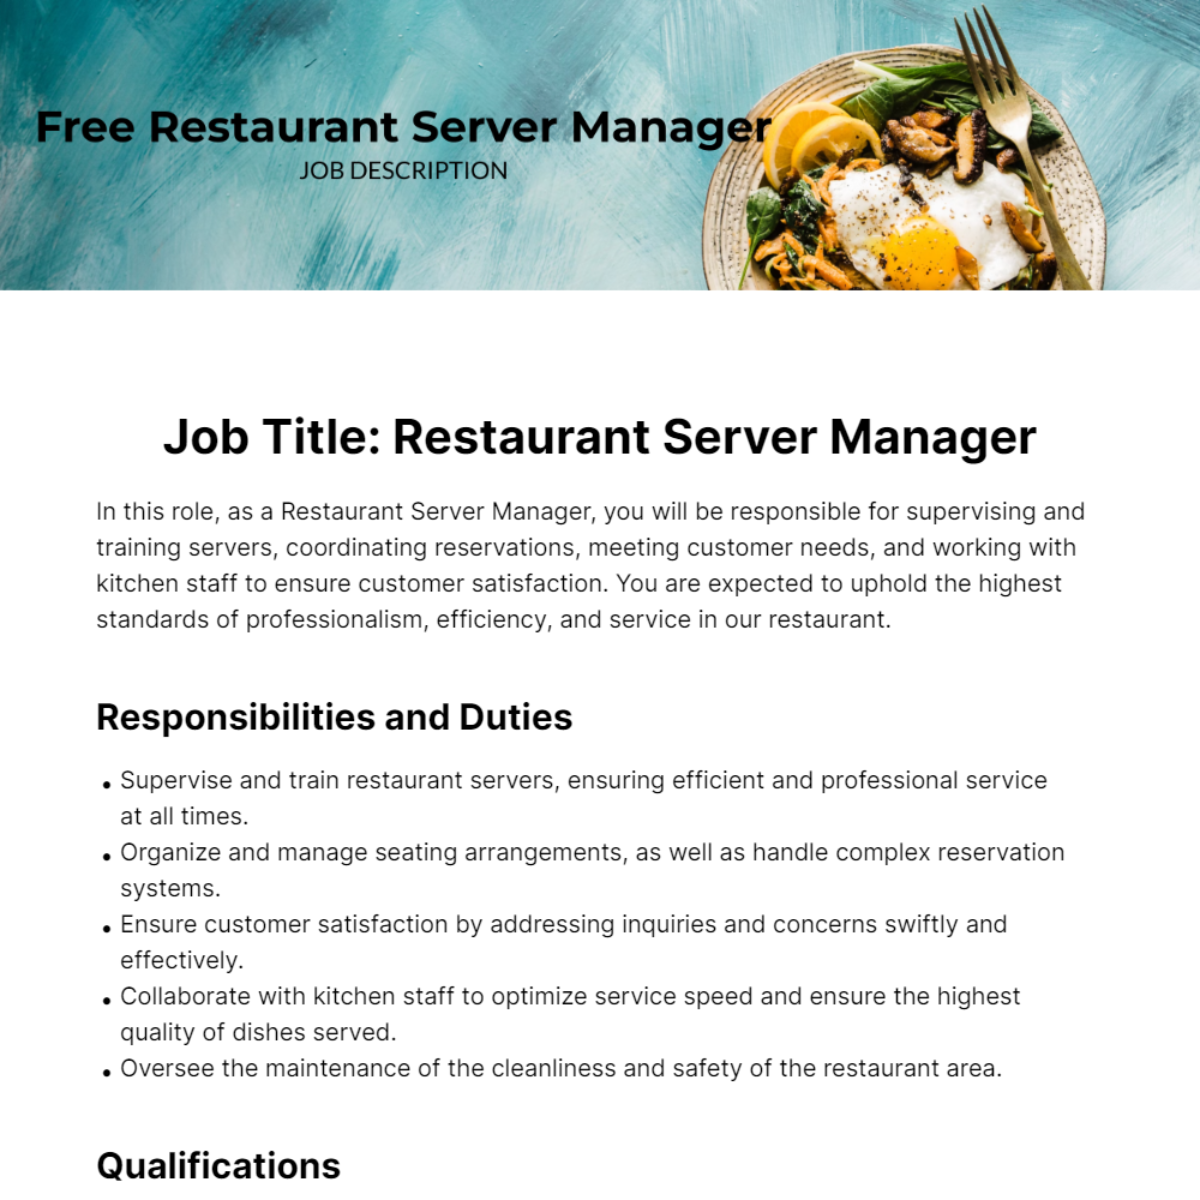 Restaurant Server Manager Job Description Template